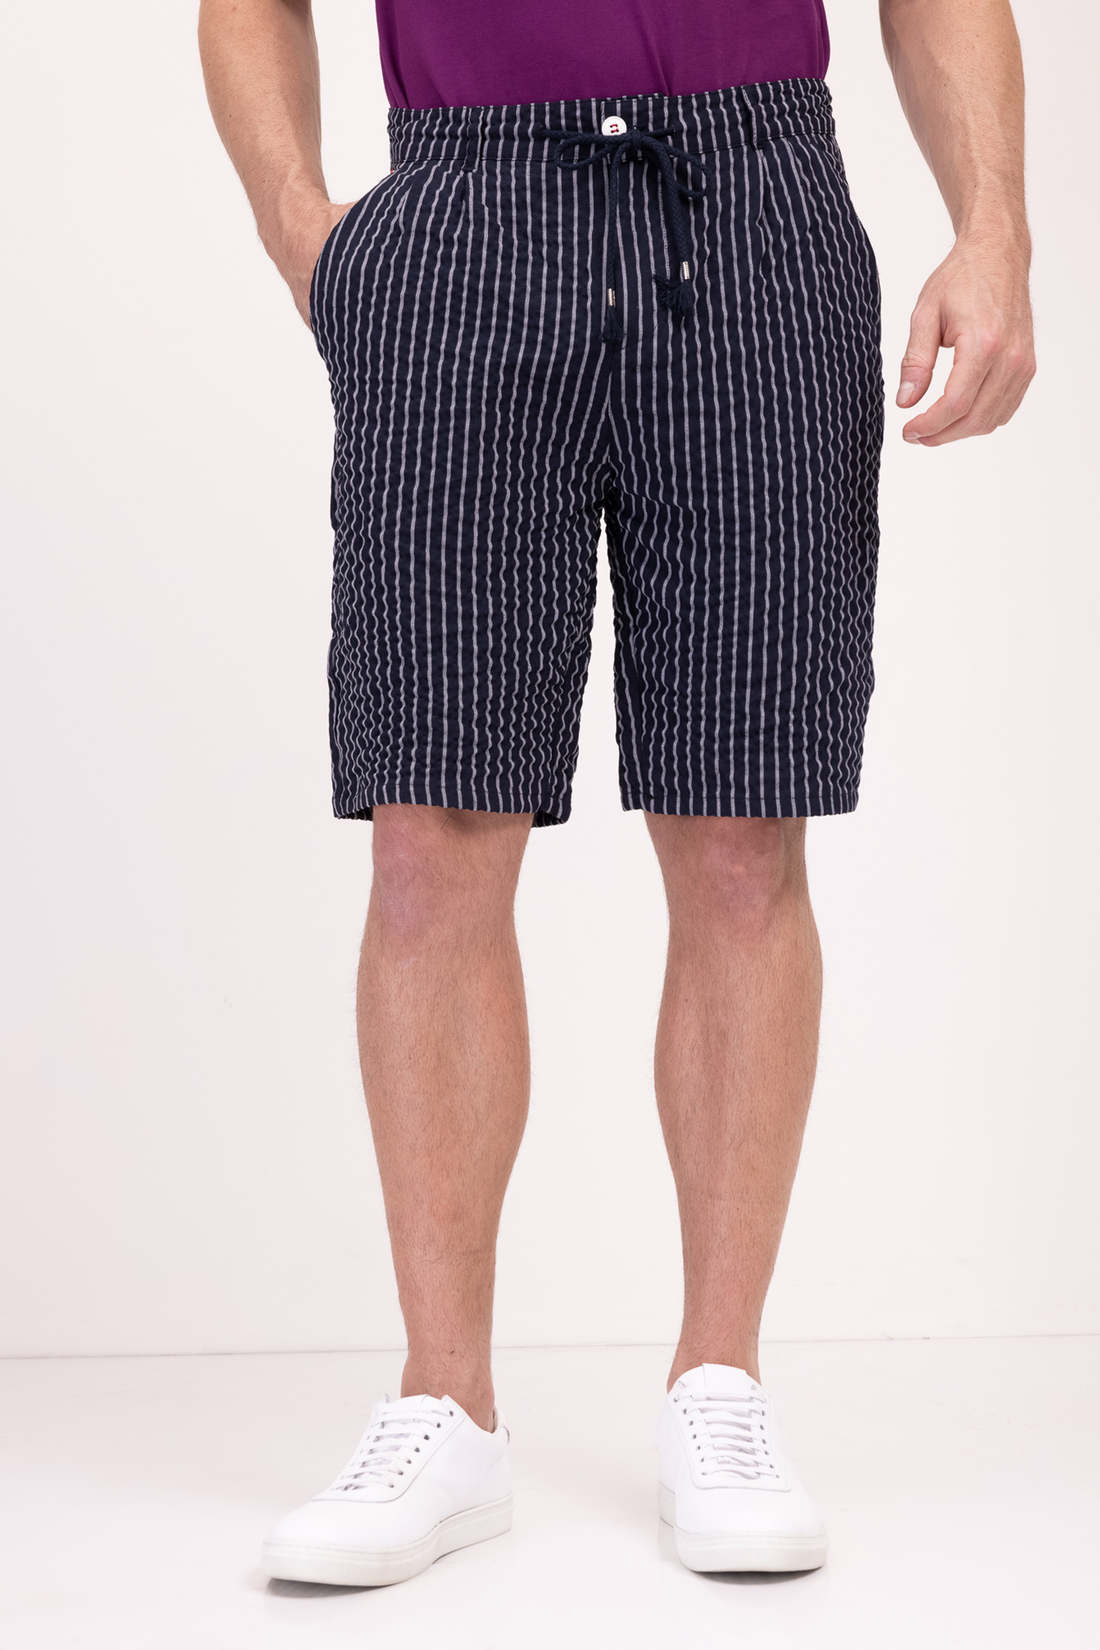 Bondi Casual Striped Shorts N° 2558  - Navy White - Ron Tomson